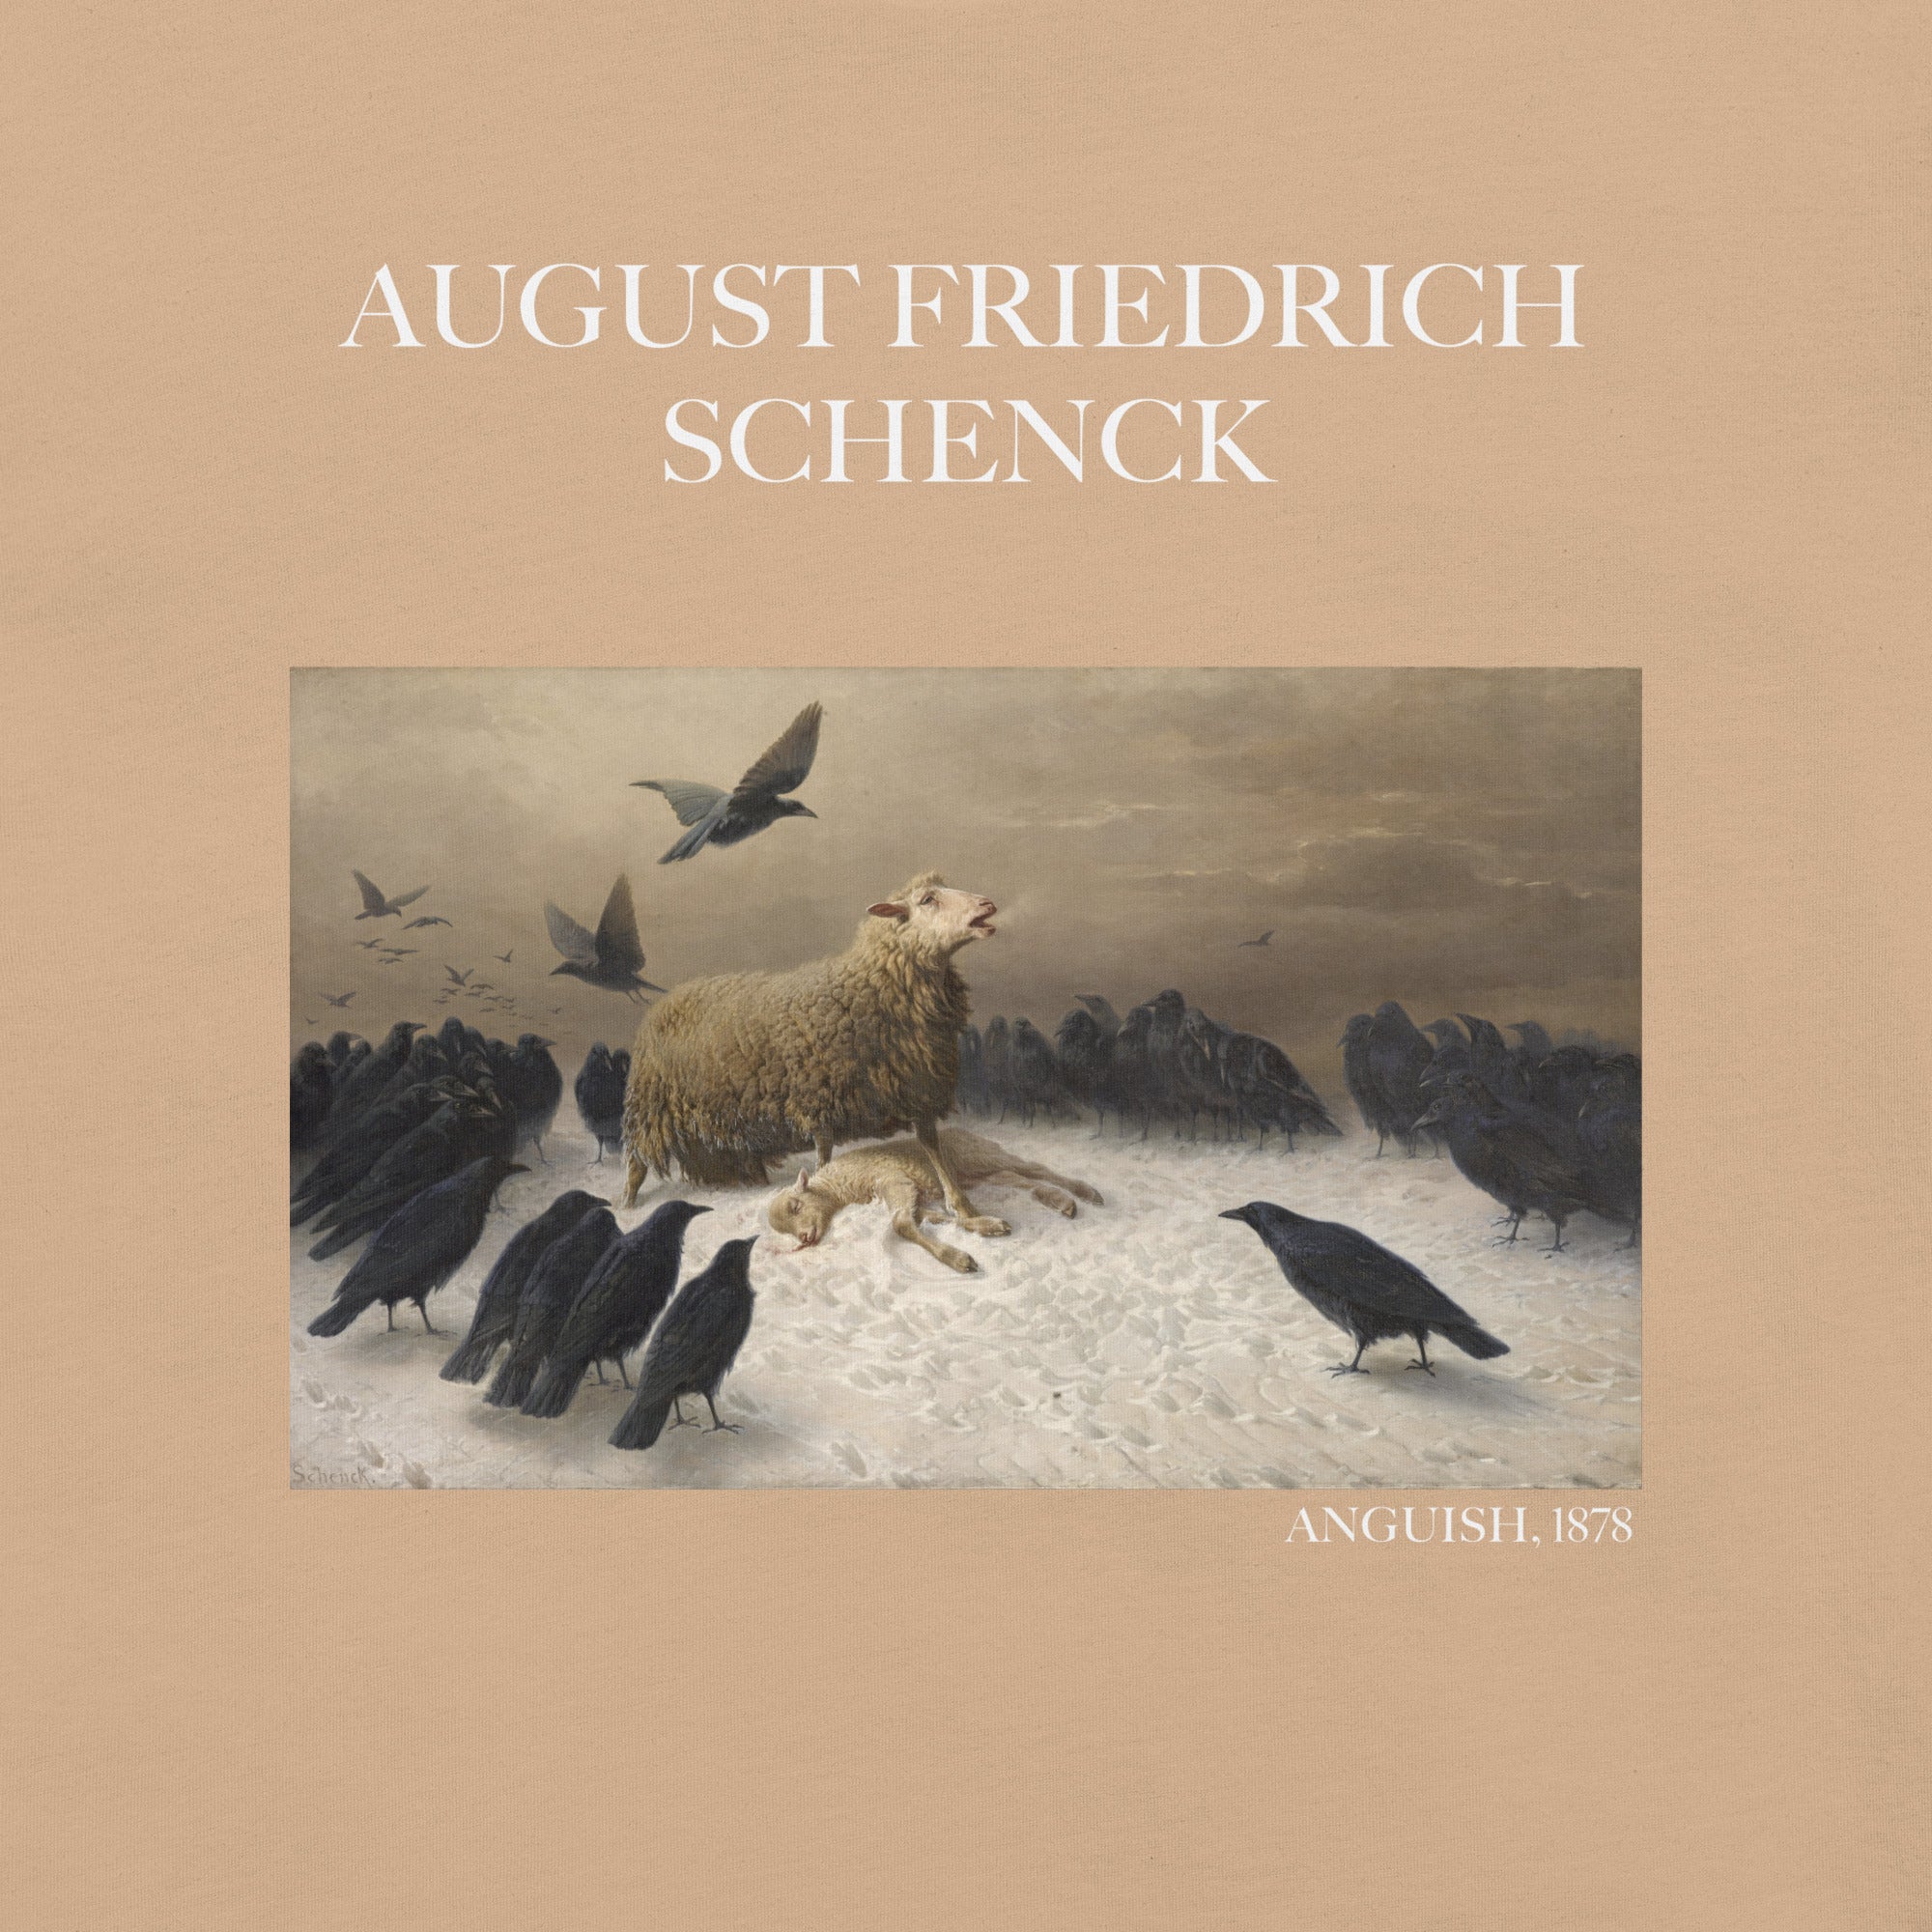 August Friedrich Schenck 'Anguish' Famous Painting T-Shirt | Unisex Classic Art Tee